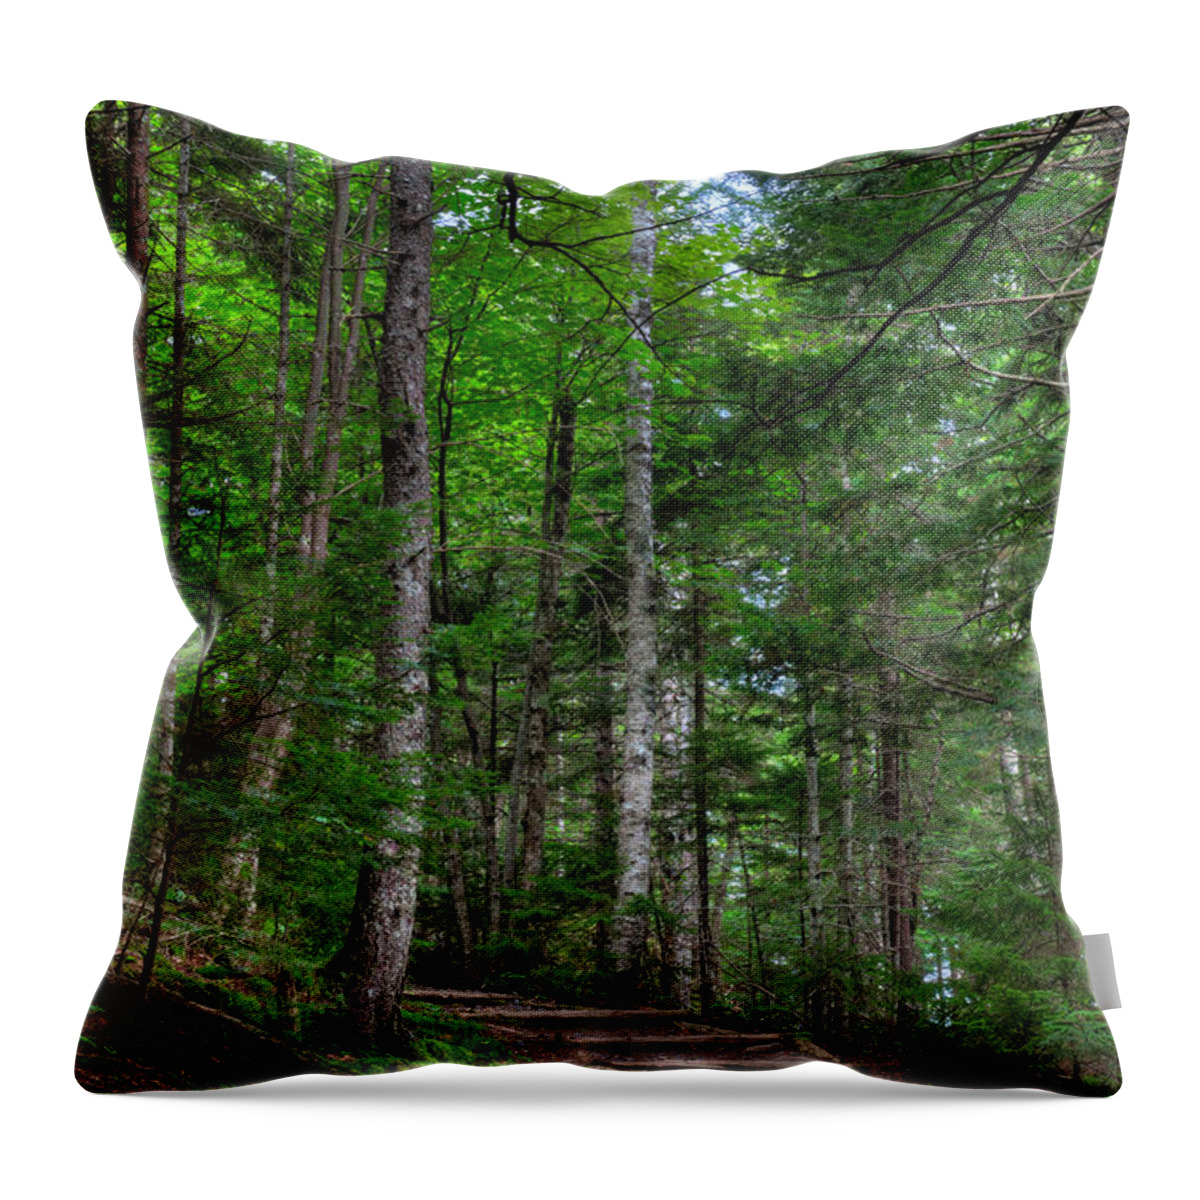 Acadia Throw Pillow featuring the photograph Beech Mountain Trail Acadia by Steve Gadomski